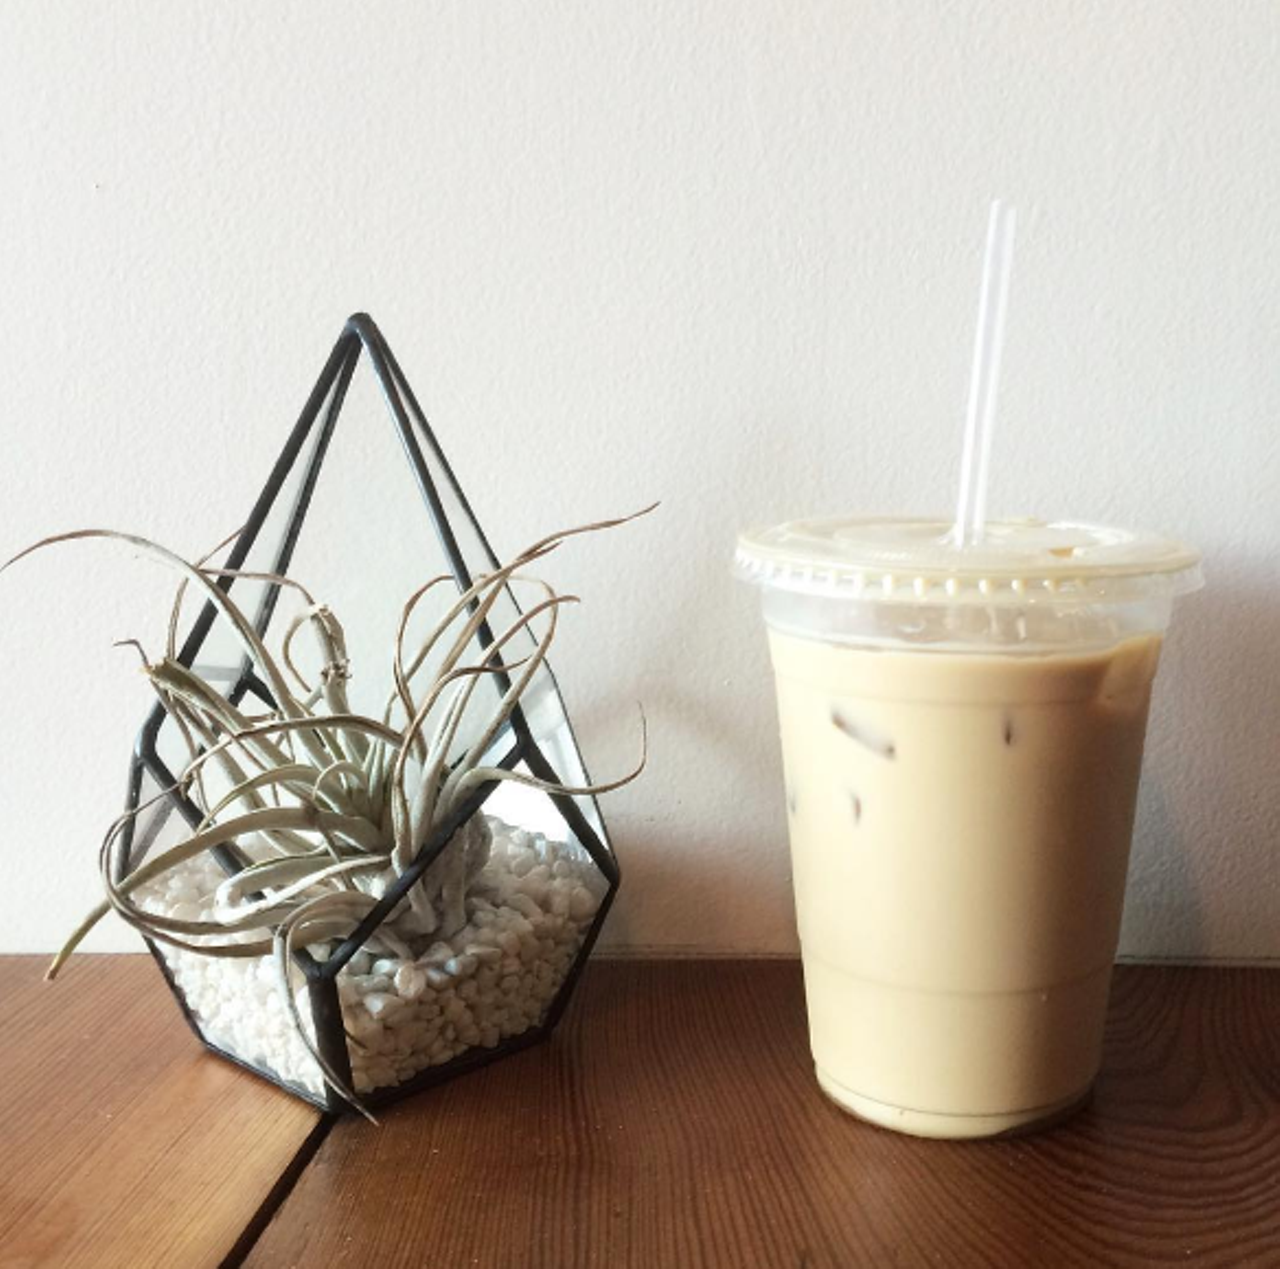 Indy Coffee
7114 UTSA Boulevard #103, (210) 233-9203
Photo via Instagram/miiiijaa